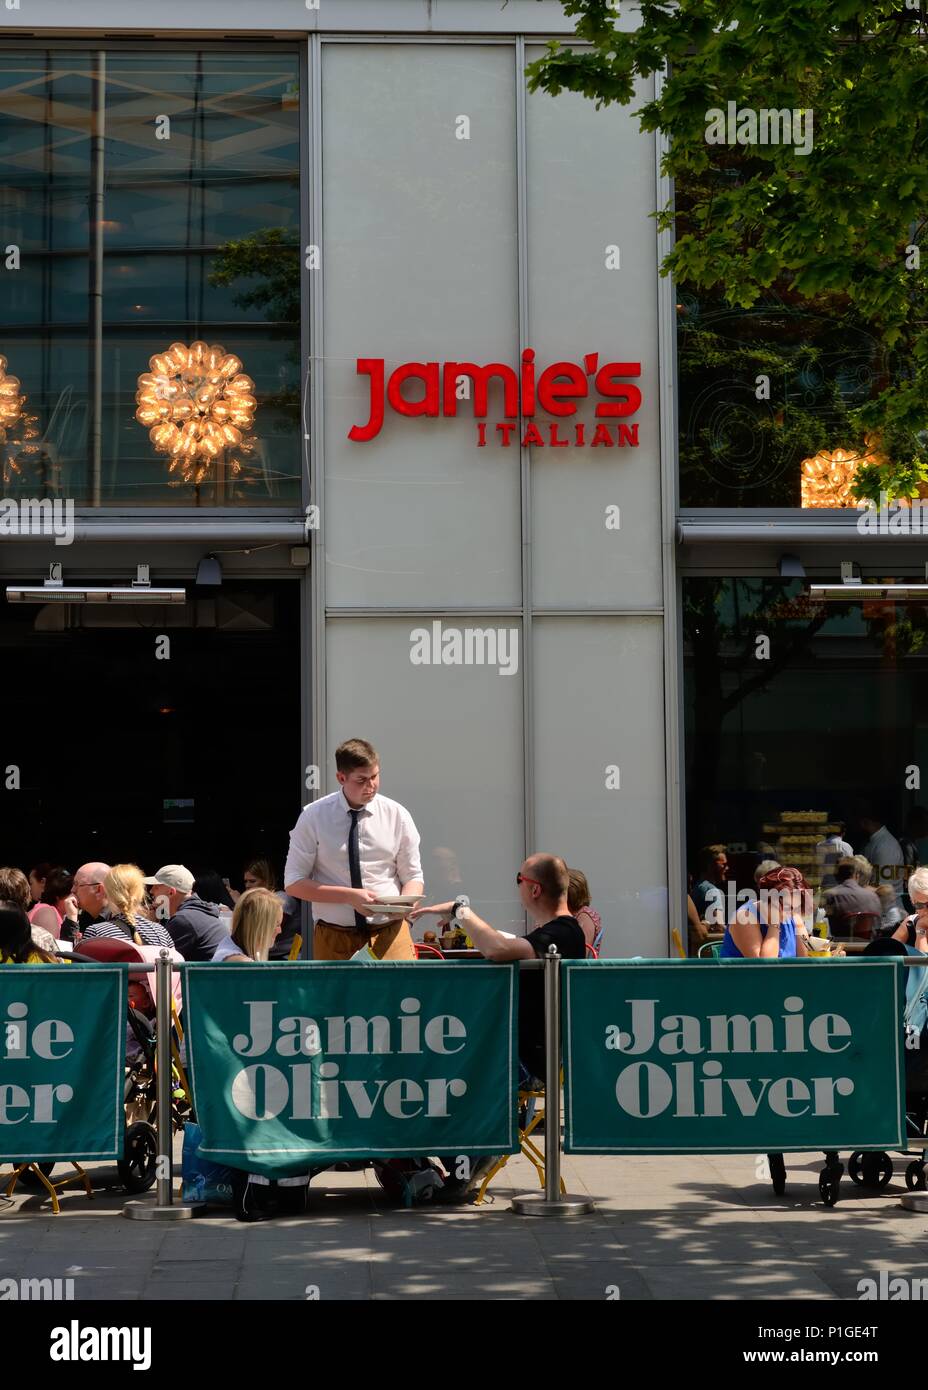 Celebrity chef Jamie Oliver's Italian restaurant in Liverpool, England, UK Stock Photo